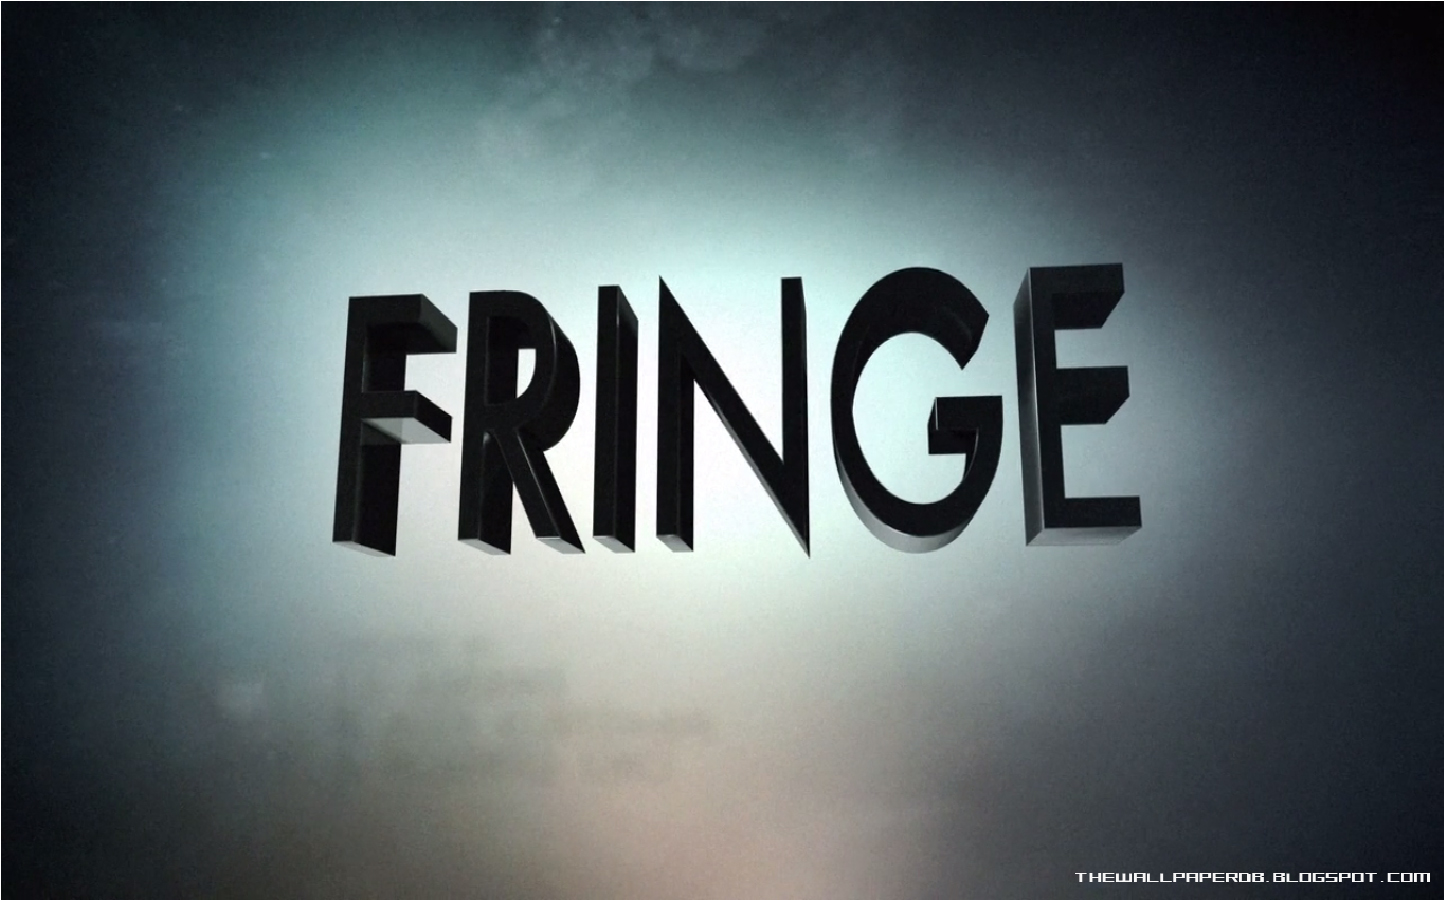 Fringe 3D Movie Title Cover HD Wallpaper The Wallpaper Database